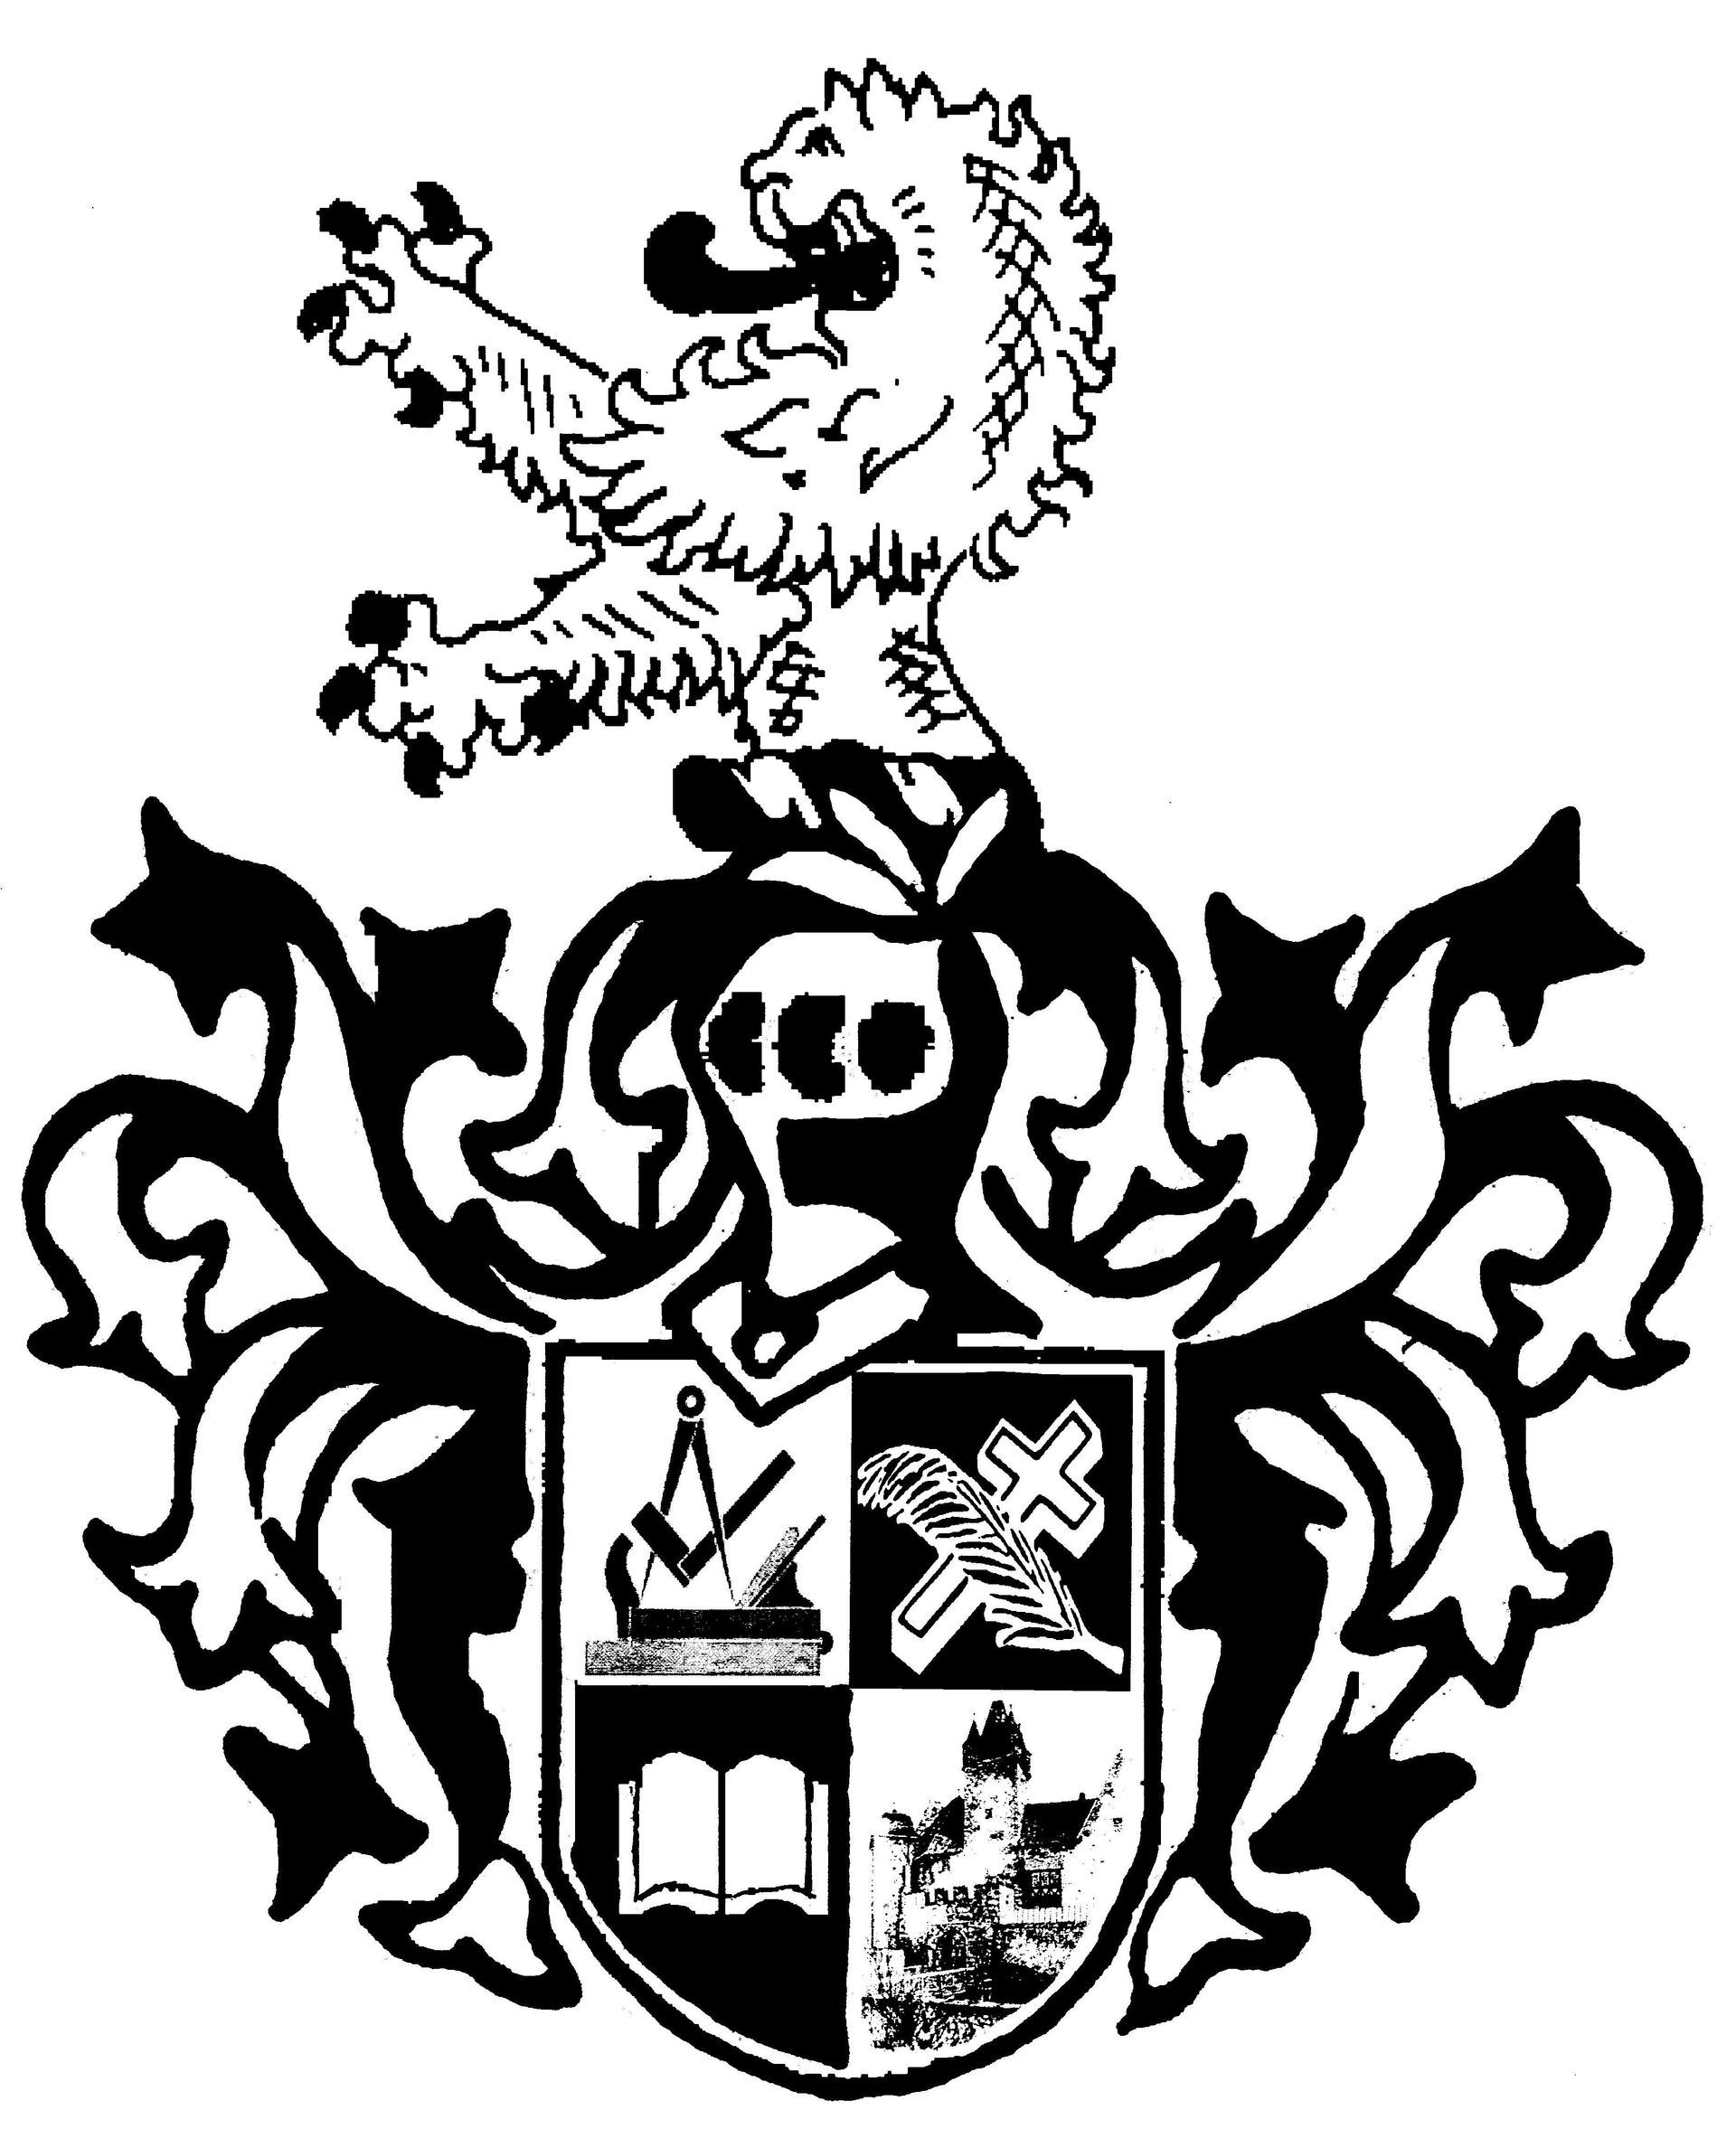 Bestattungsinstitut Schmidt-logo